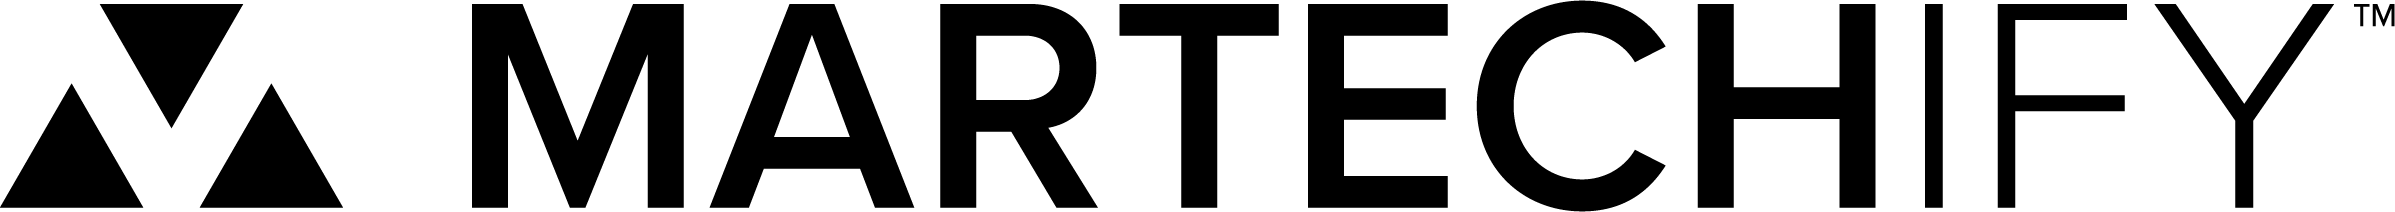 Martechify Logo Black